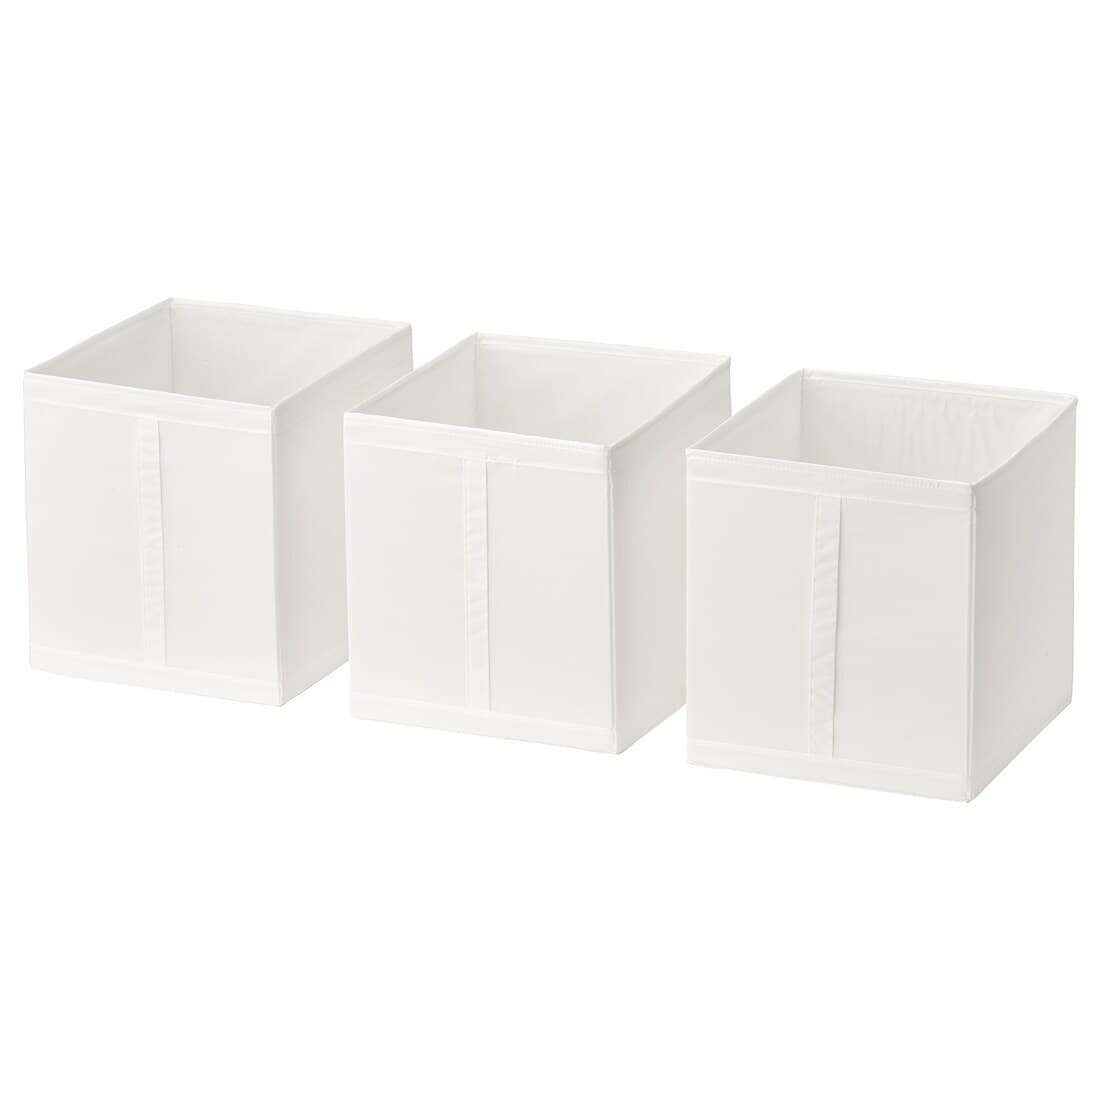 Набор коробок, белый, 31х55х33, скубб икеа, SKUBB IKEA - фотография № 1